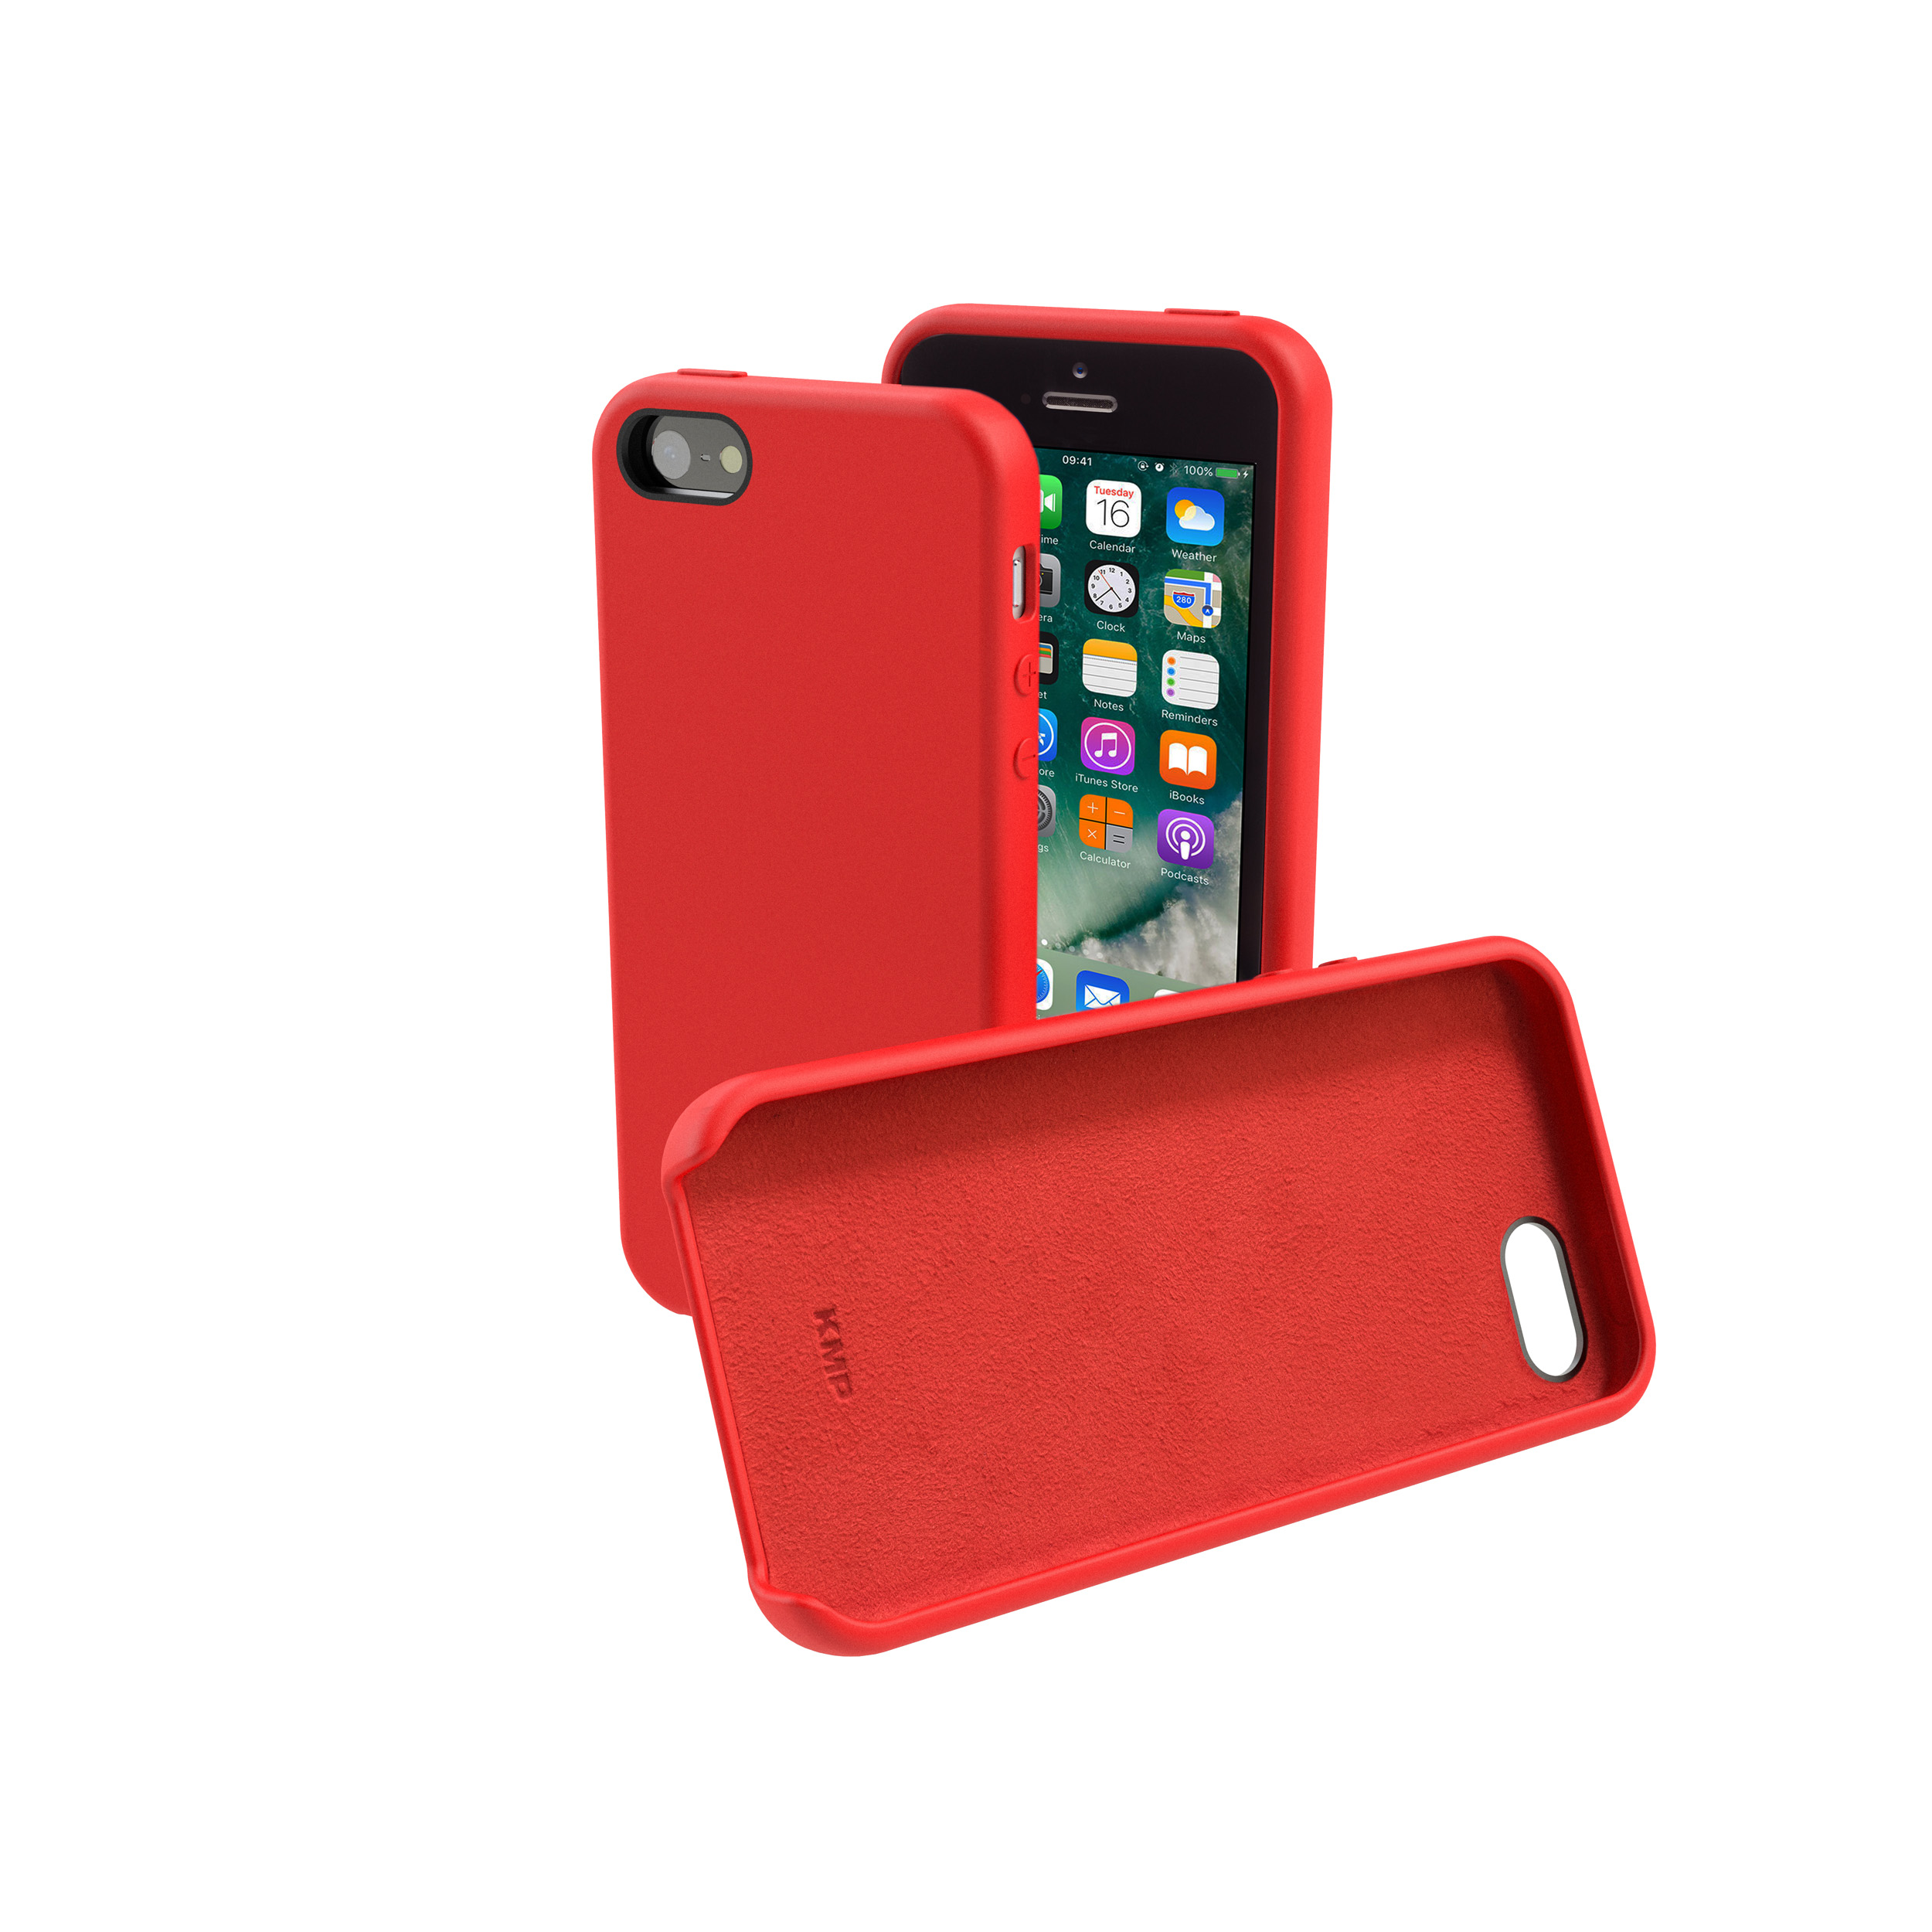 red Schutzhülle Backcover, für iPhone Red, Apple, 5, Silikon SE, 5 iPhone KMP SE, 5s, 5s,